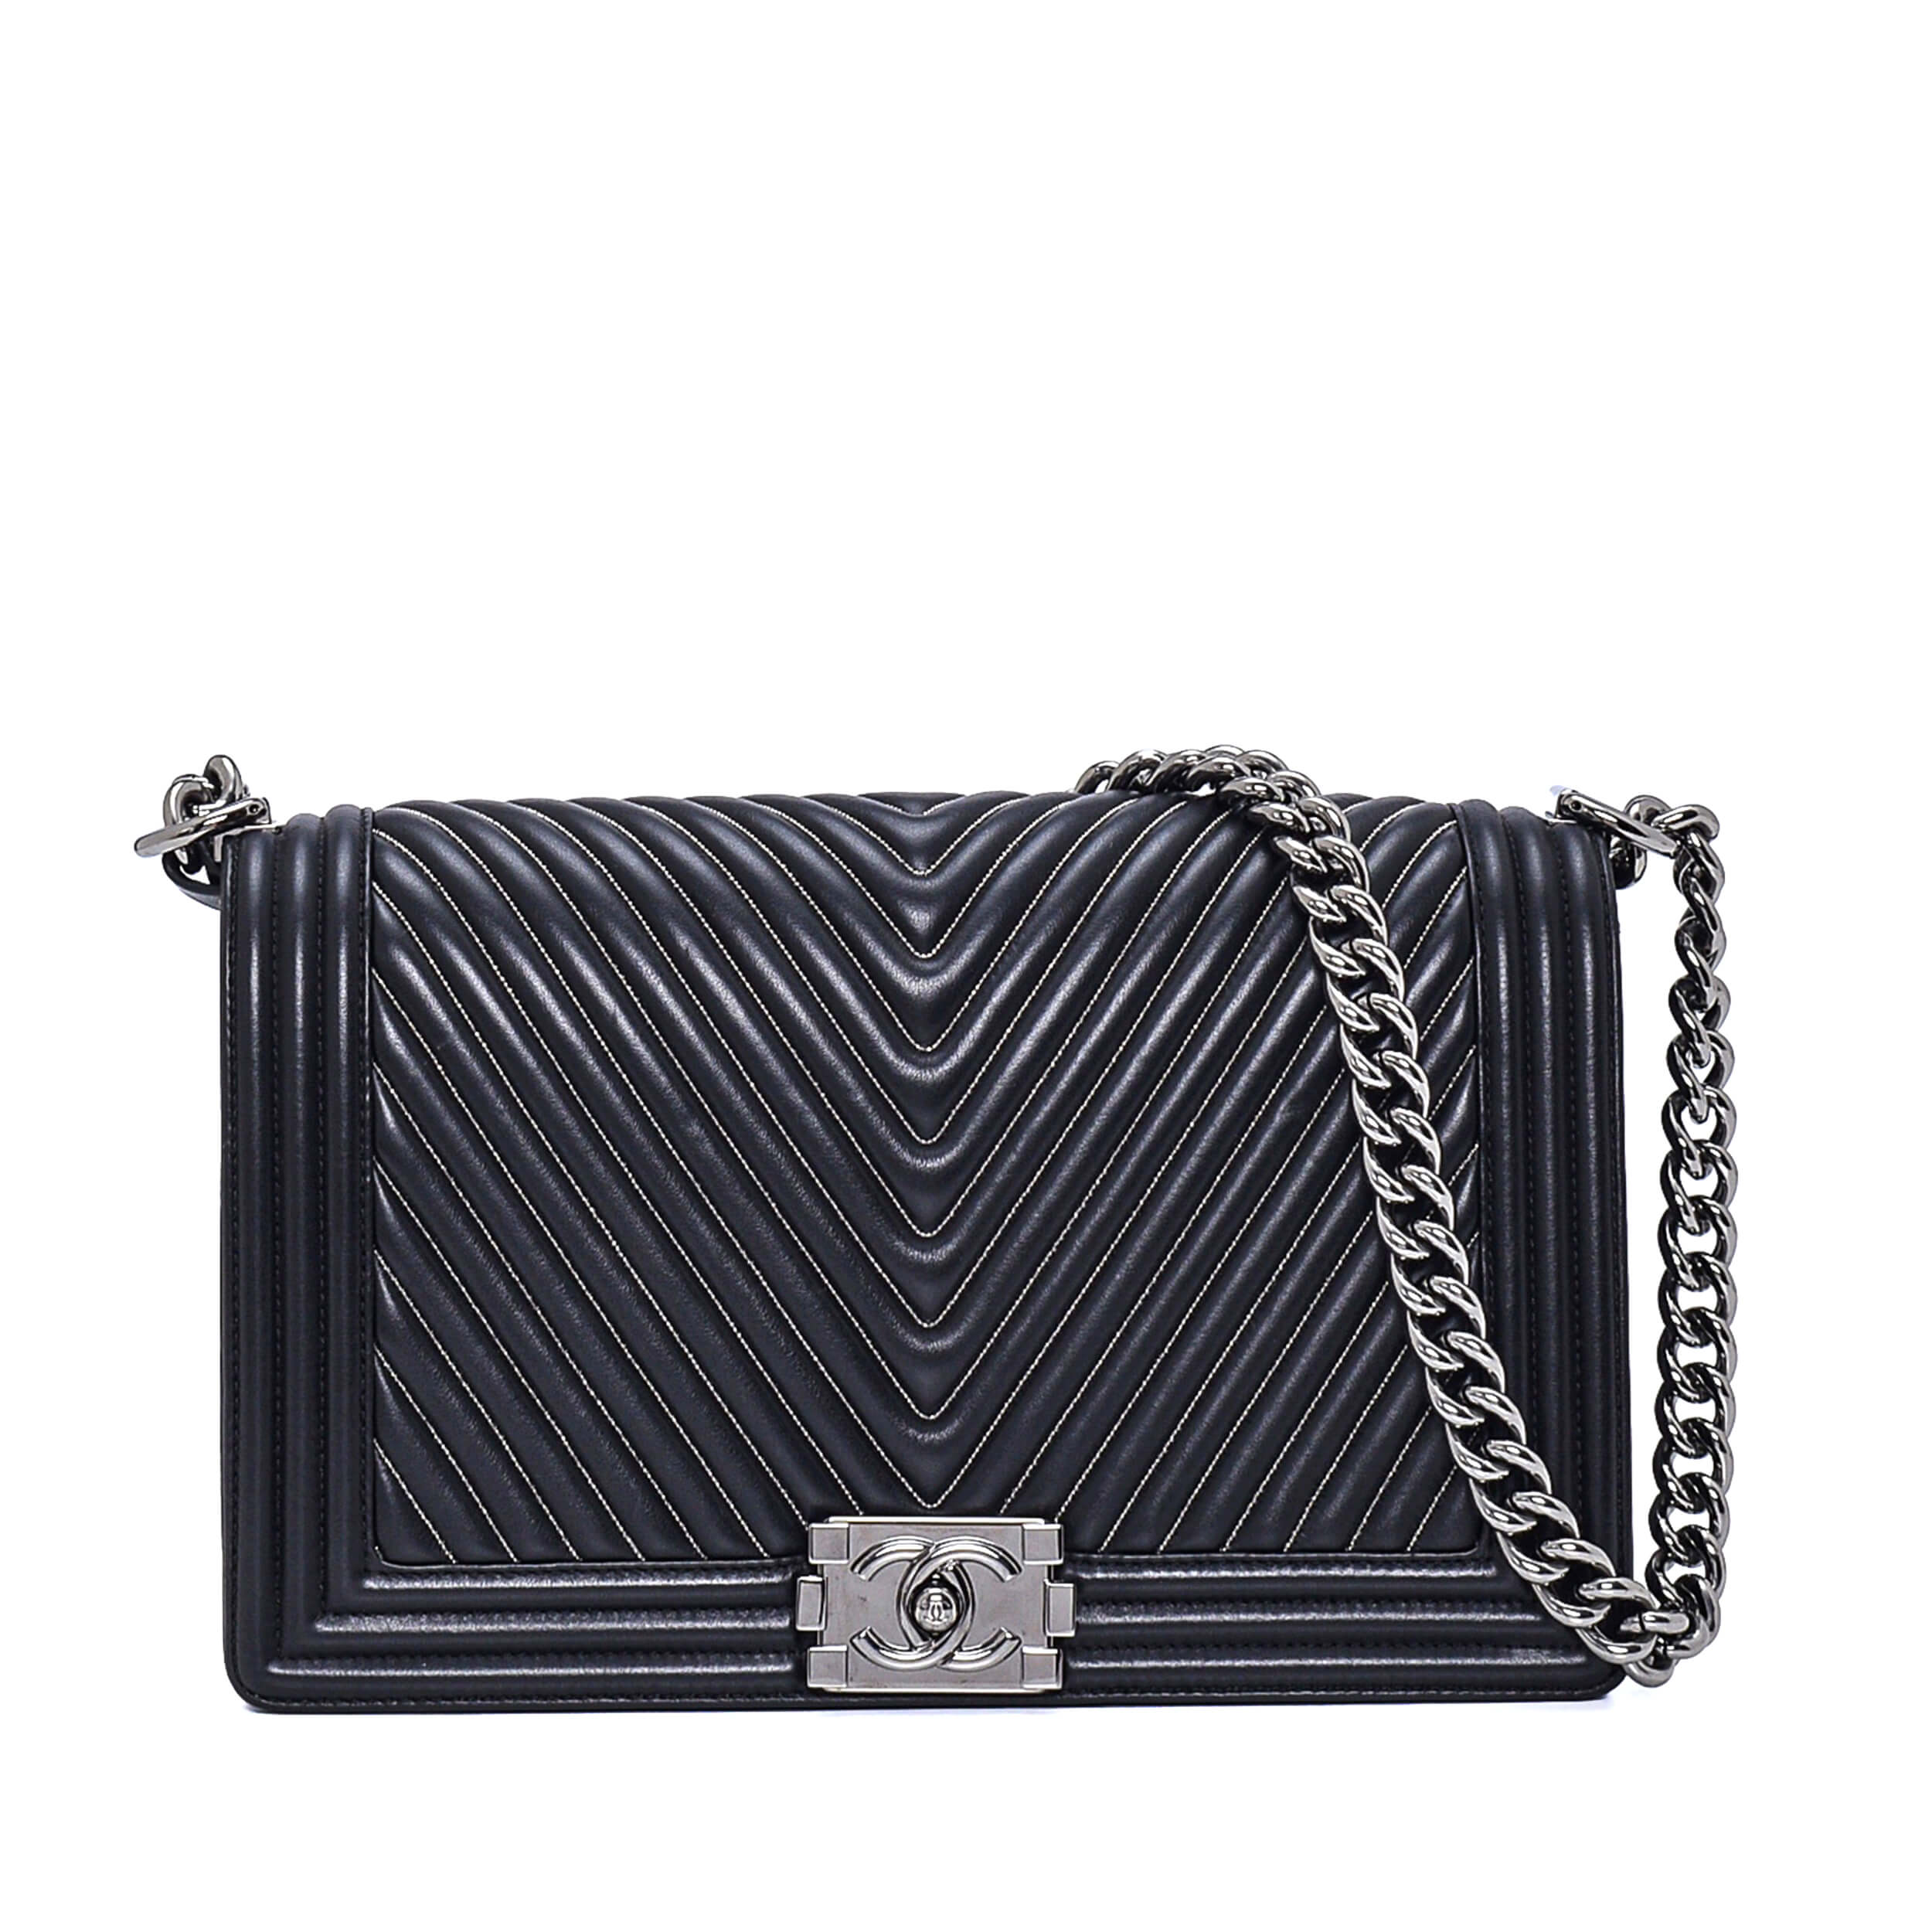 Chanel - Black Chevron Lambskin Leather Medium Boy Bag 